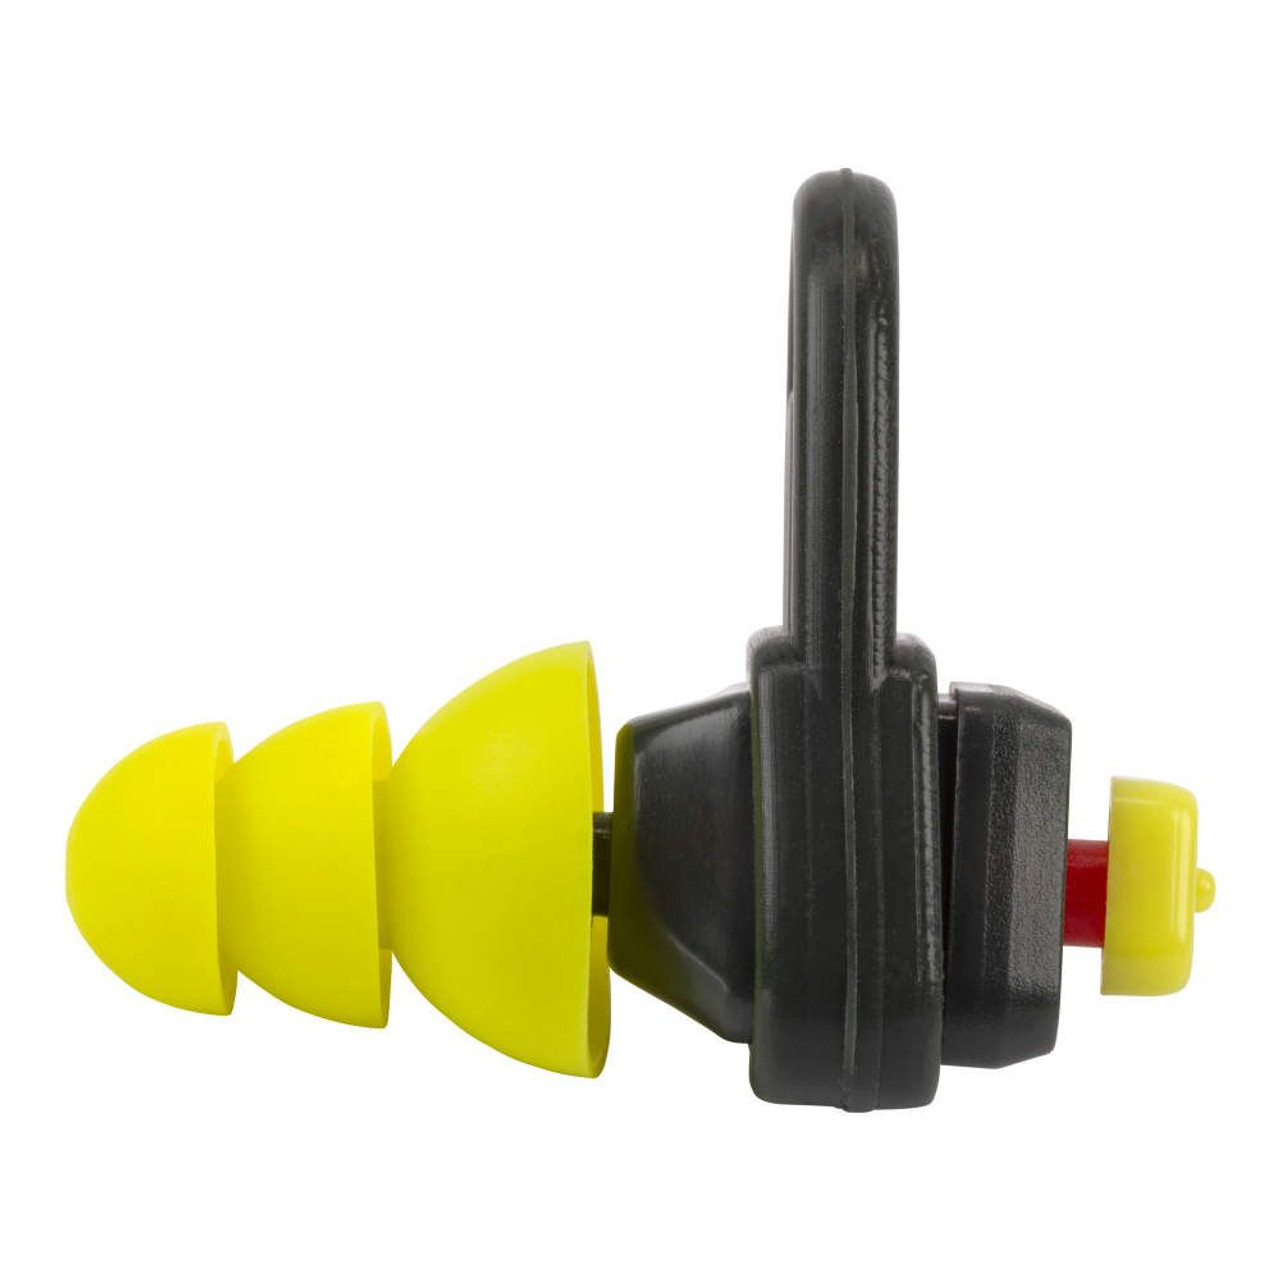 ULTRX Shift Adjustable Protection Ear Plugs